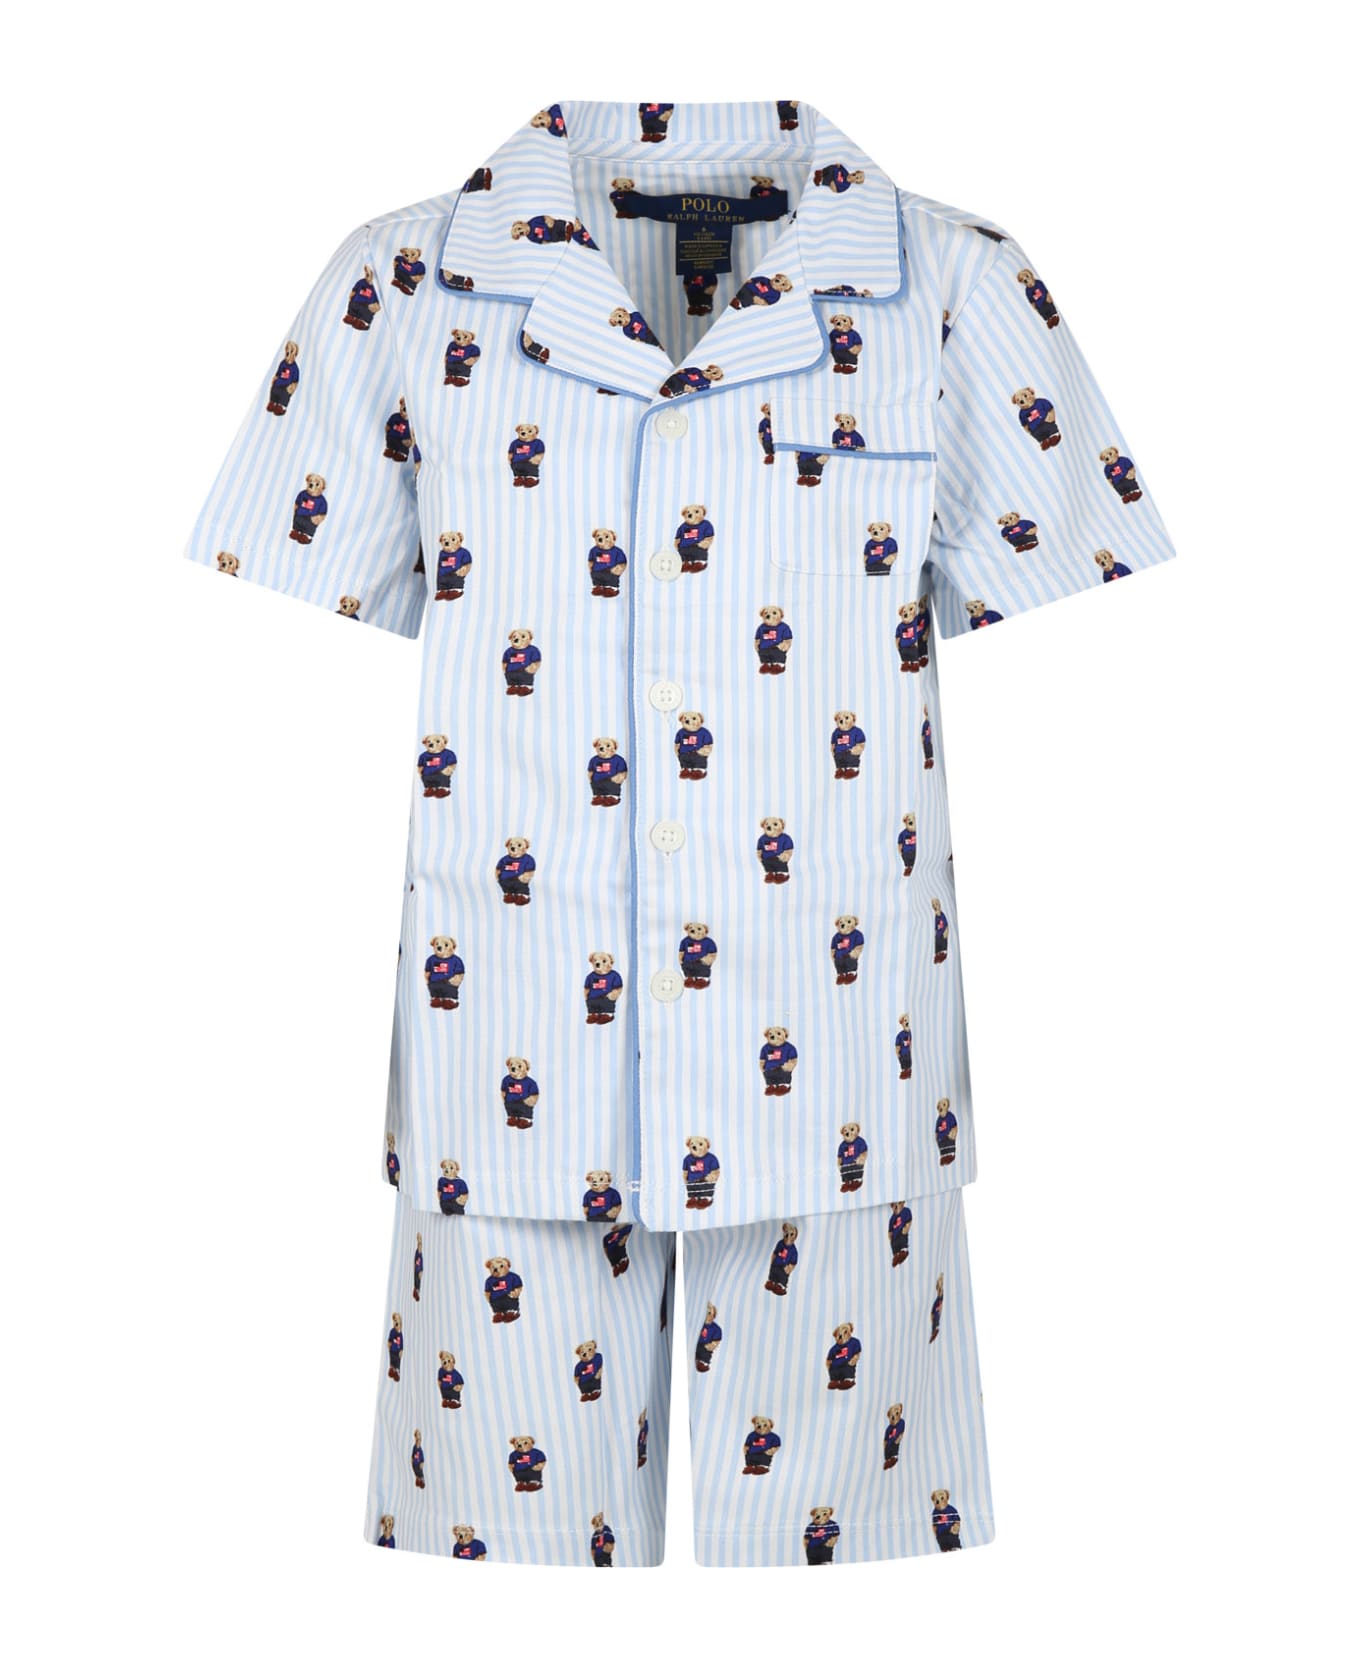 Ralph Lauren Light Blue Cotton Pajamas For Boy With Bears - Light Blue